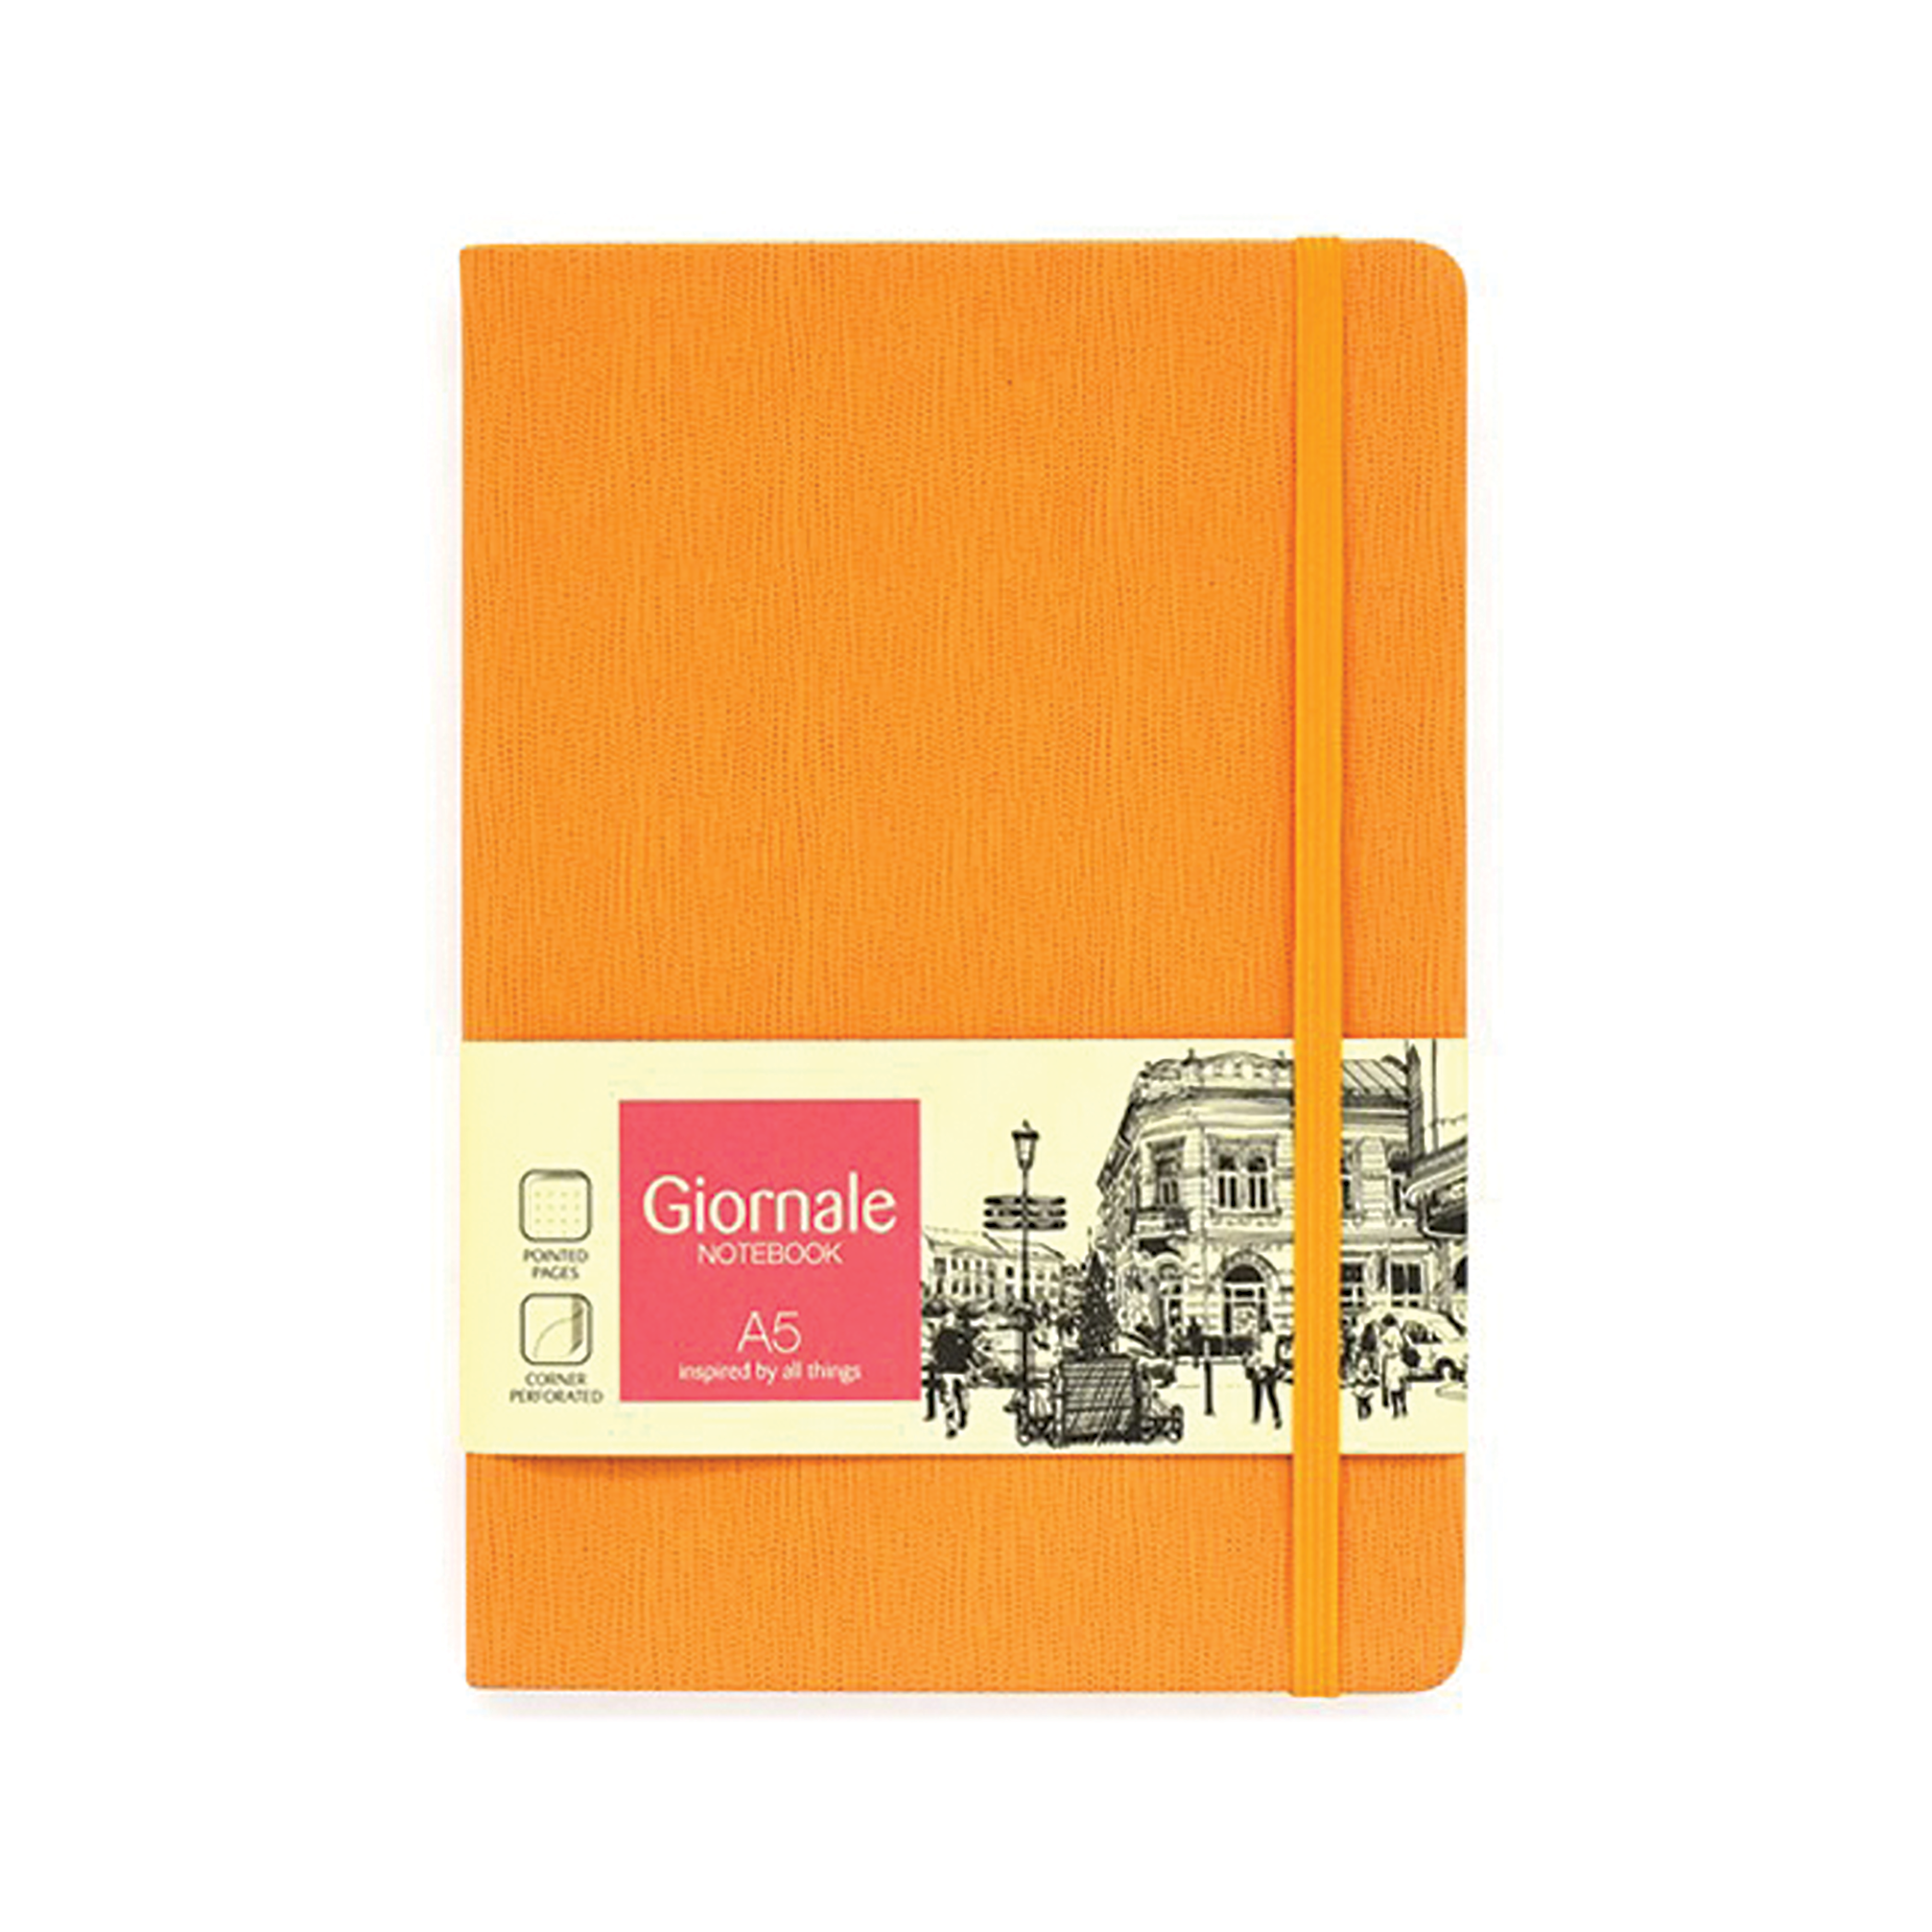 A5 Notebook_Orange.png